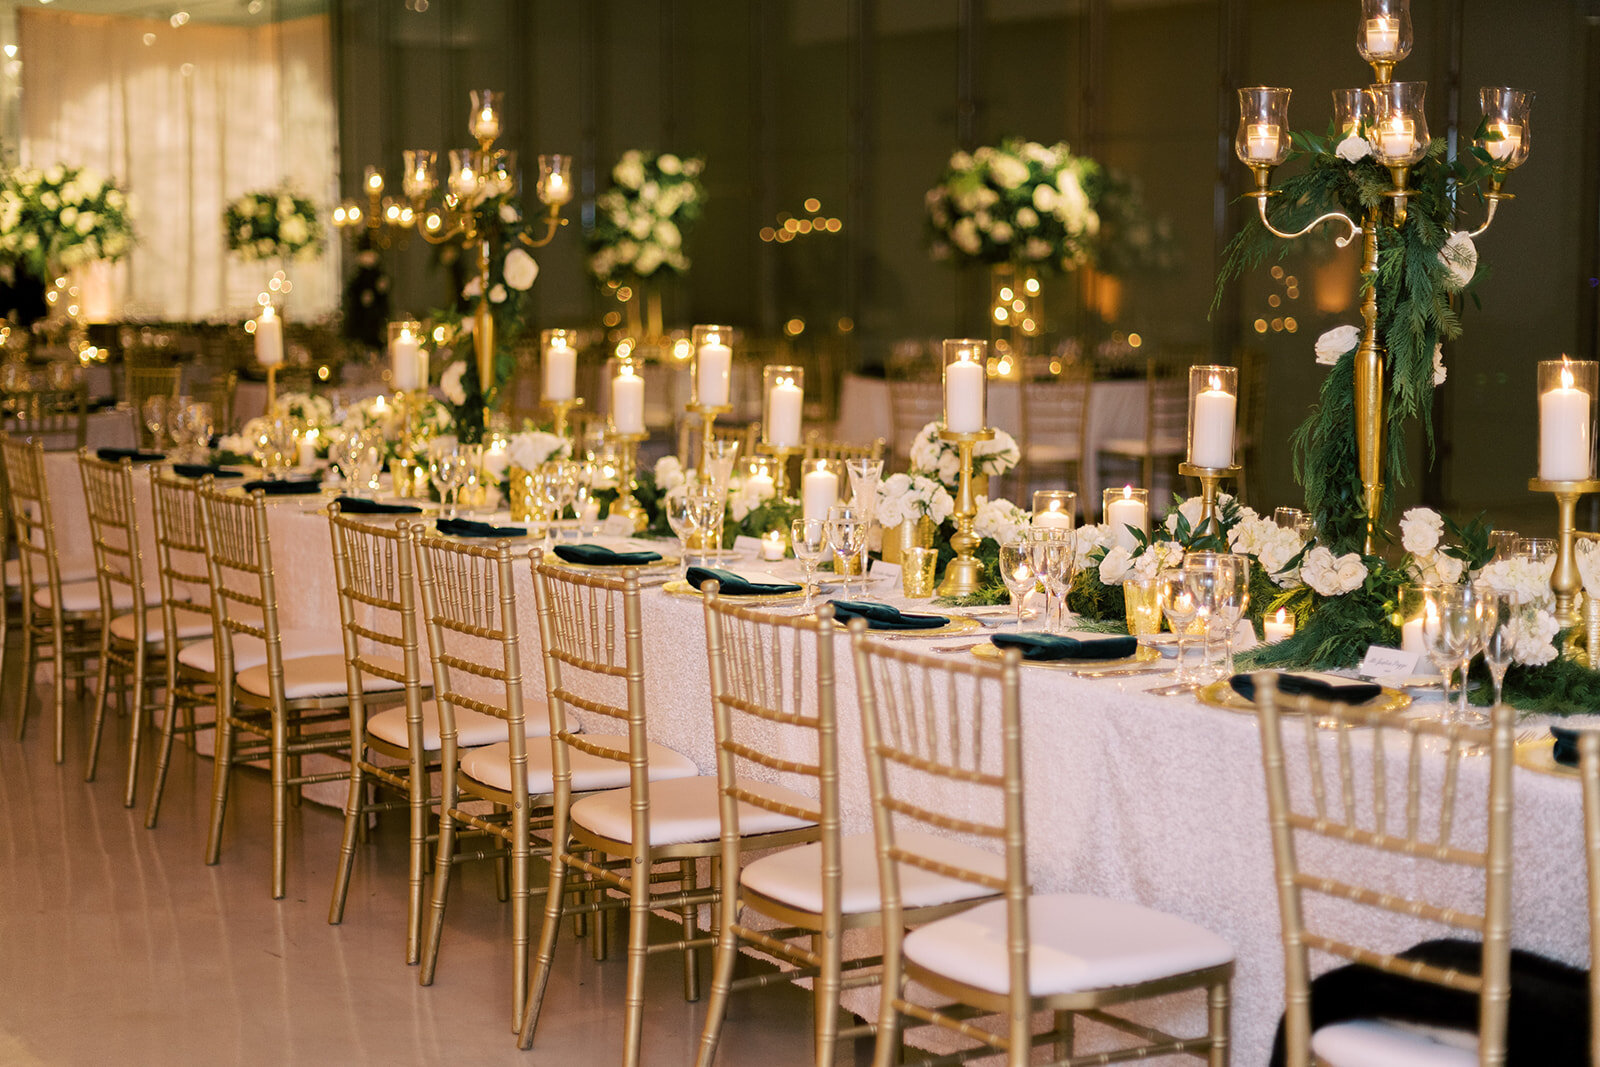 29-Venue-Six10-Wedding-table-garland